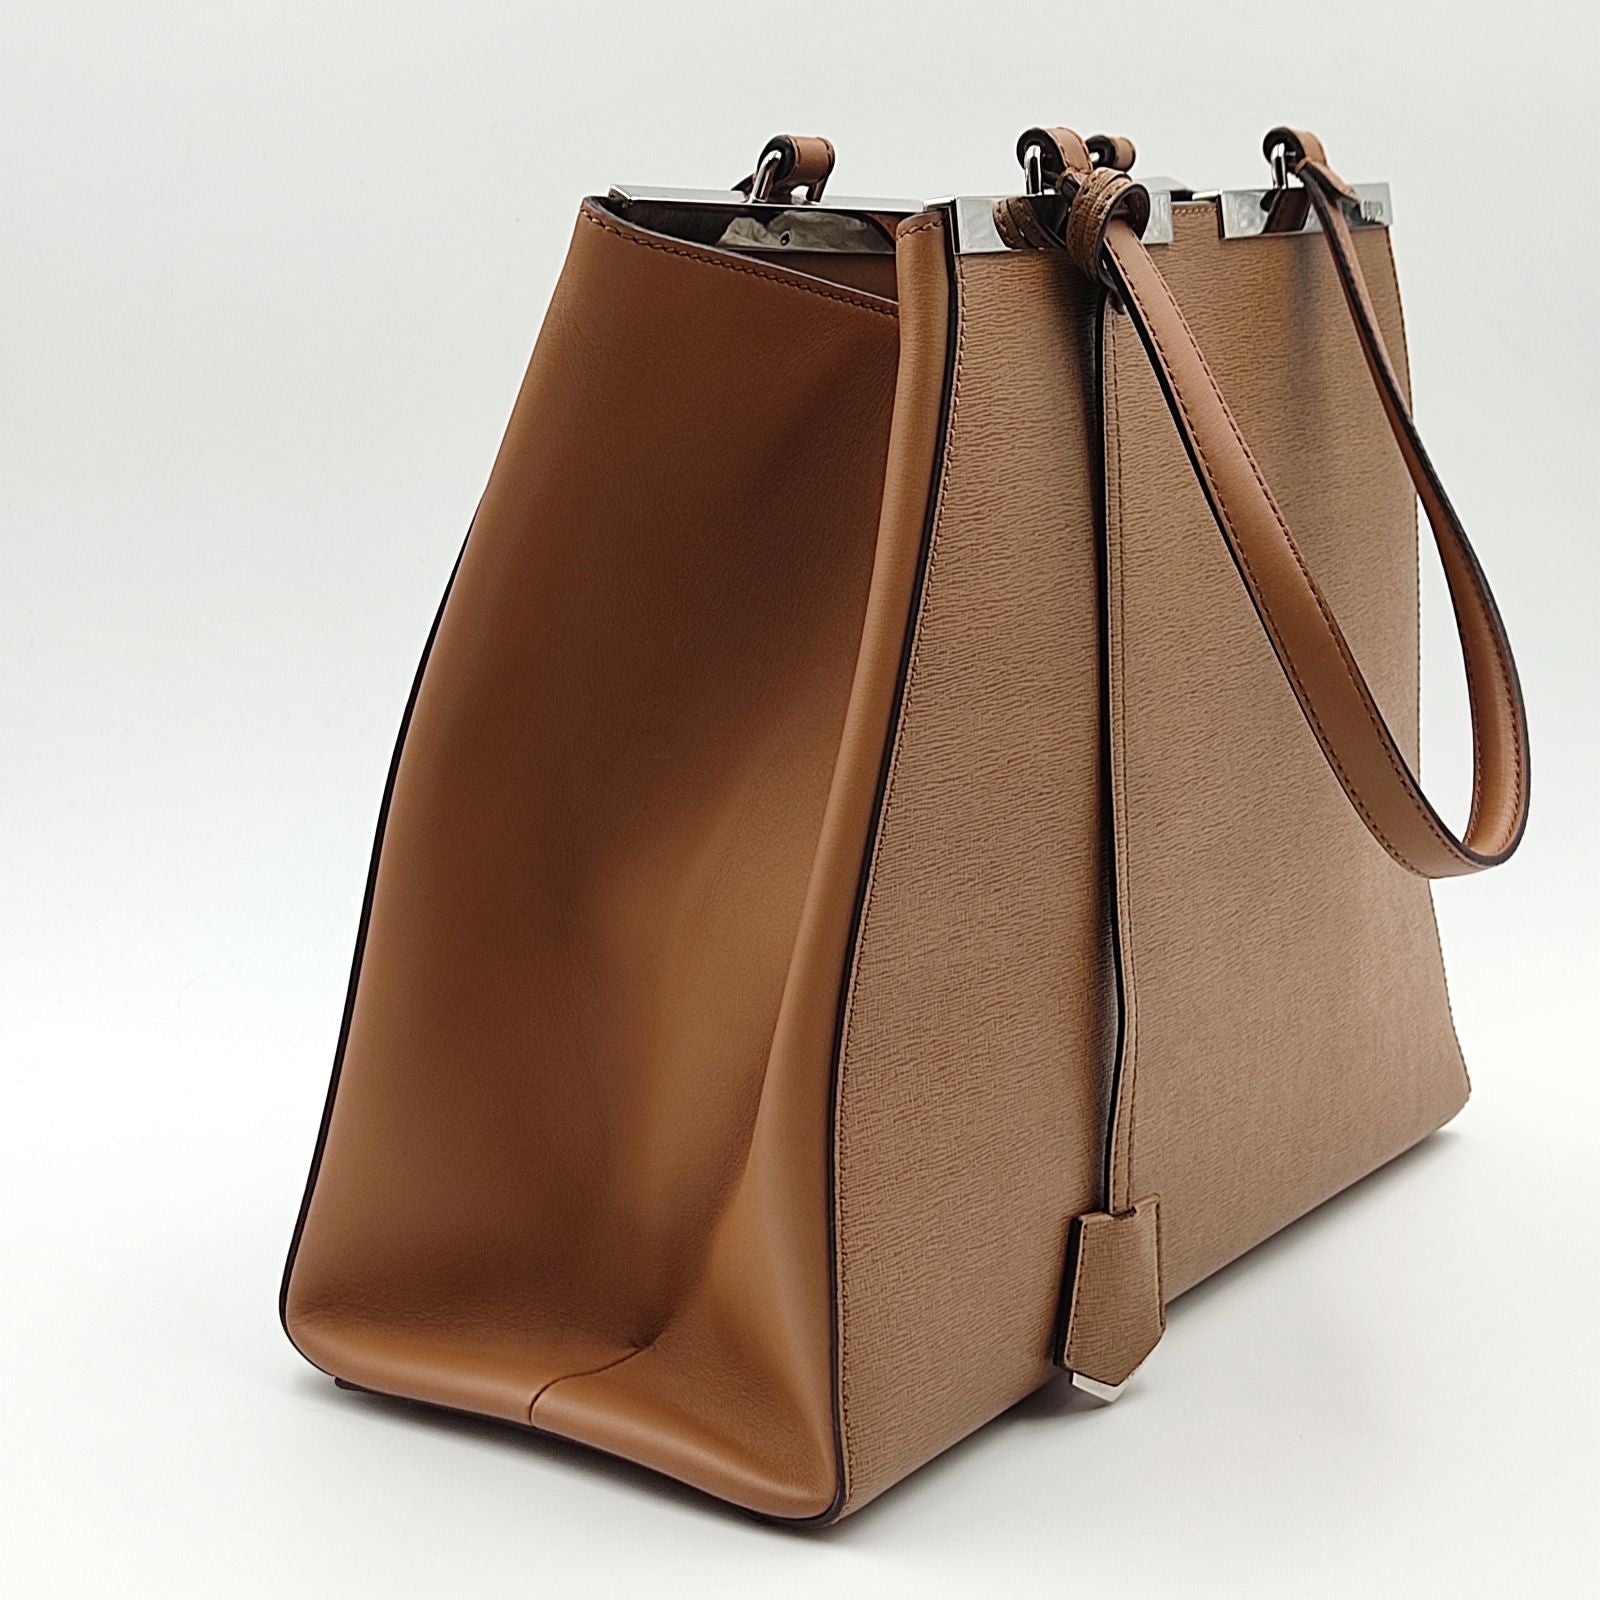 Fendi Fendi 3 Jours shoulder bag in leather and palladium - '10s